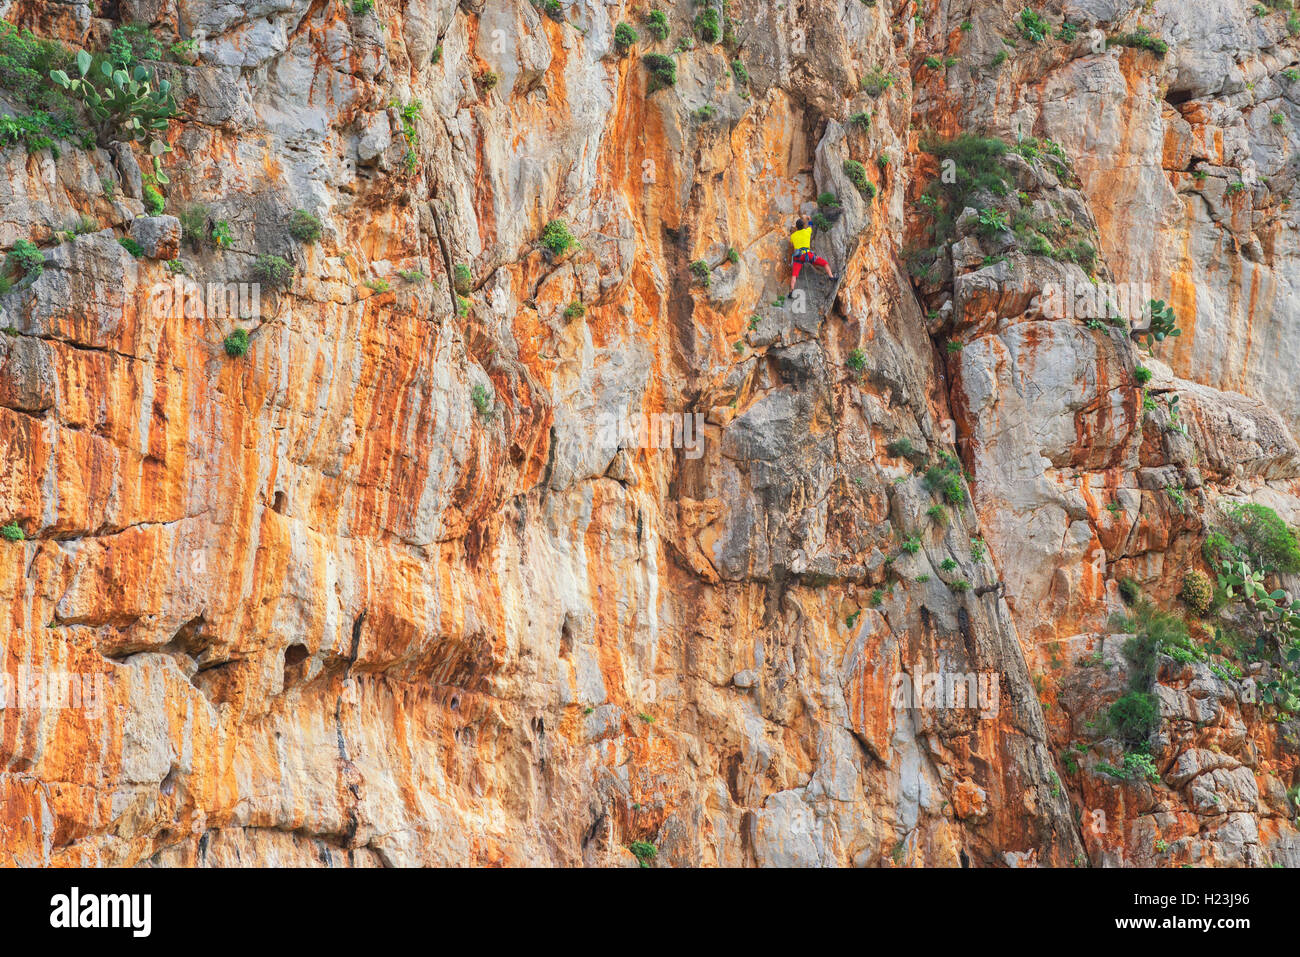 Man climbs on rock face, Climbing Festival, San Vito Lo Capo, Sicily, Italy Stock Photo